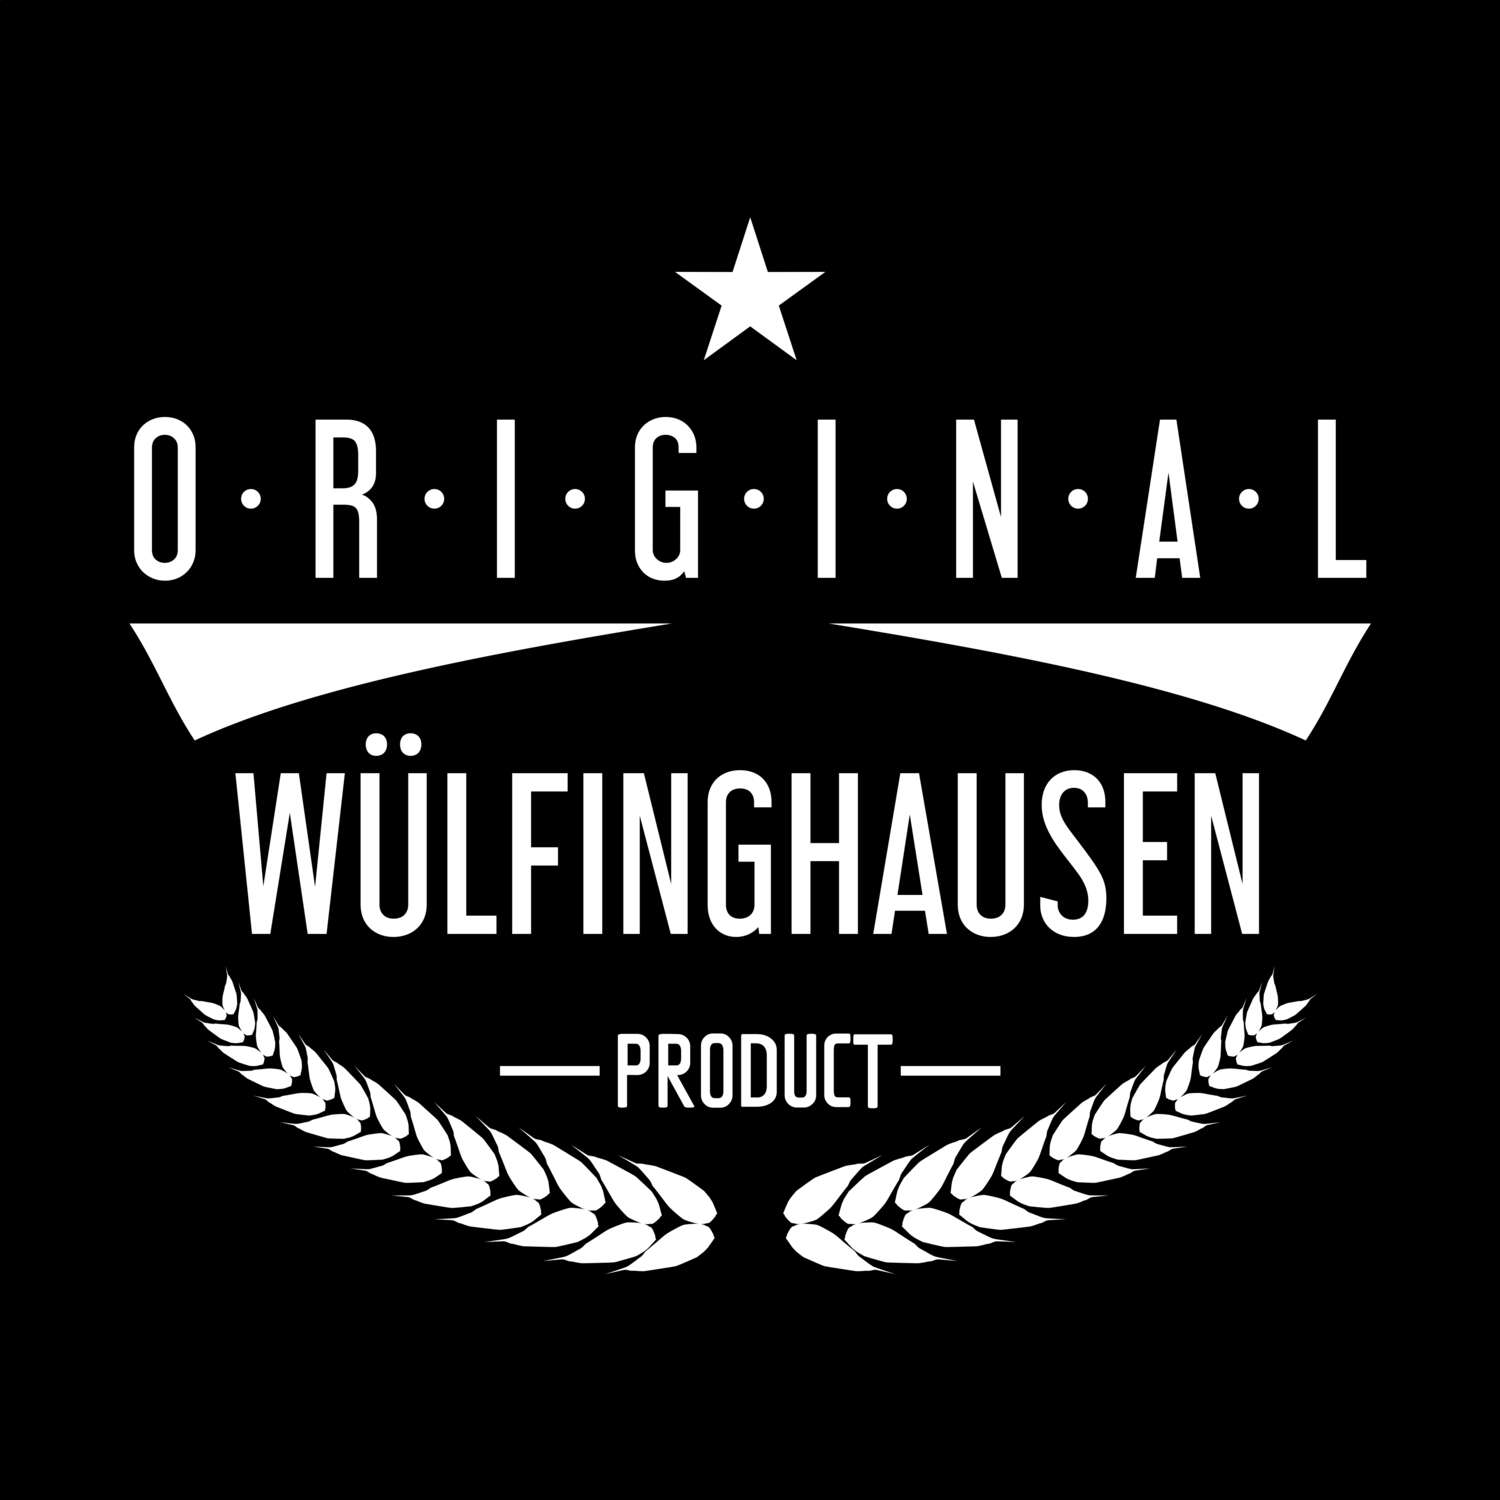 Wülfinghausen T-Shirt »Original Product«